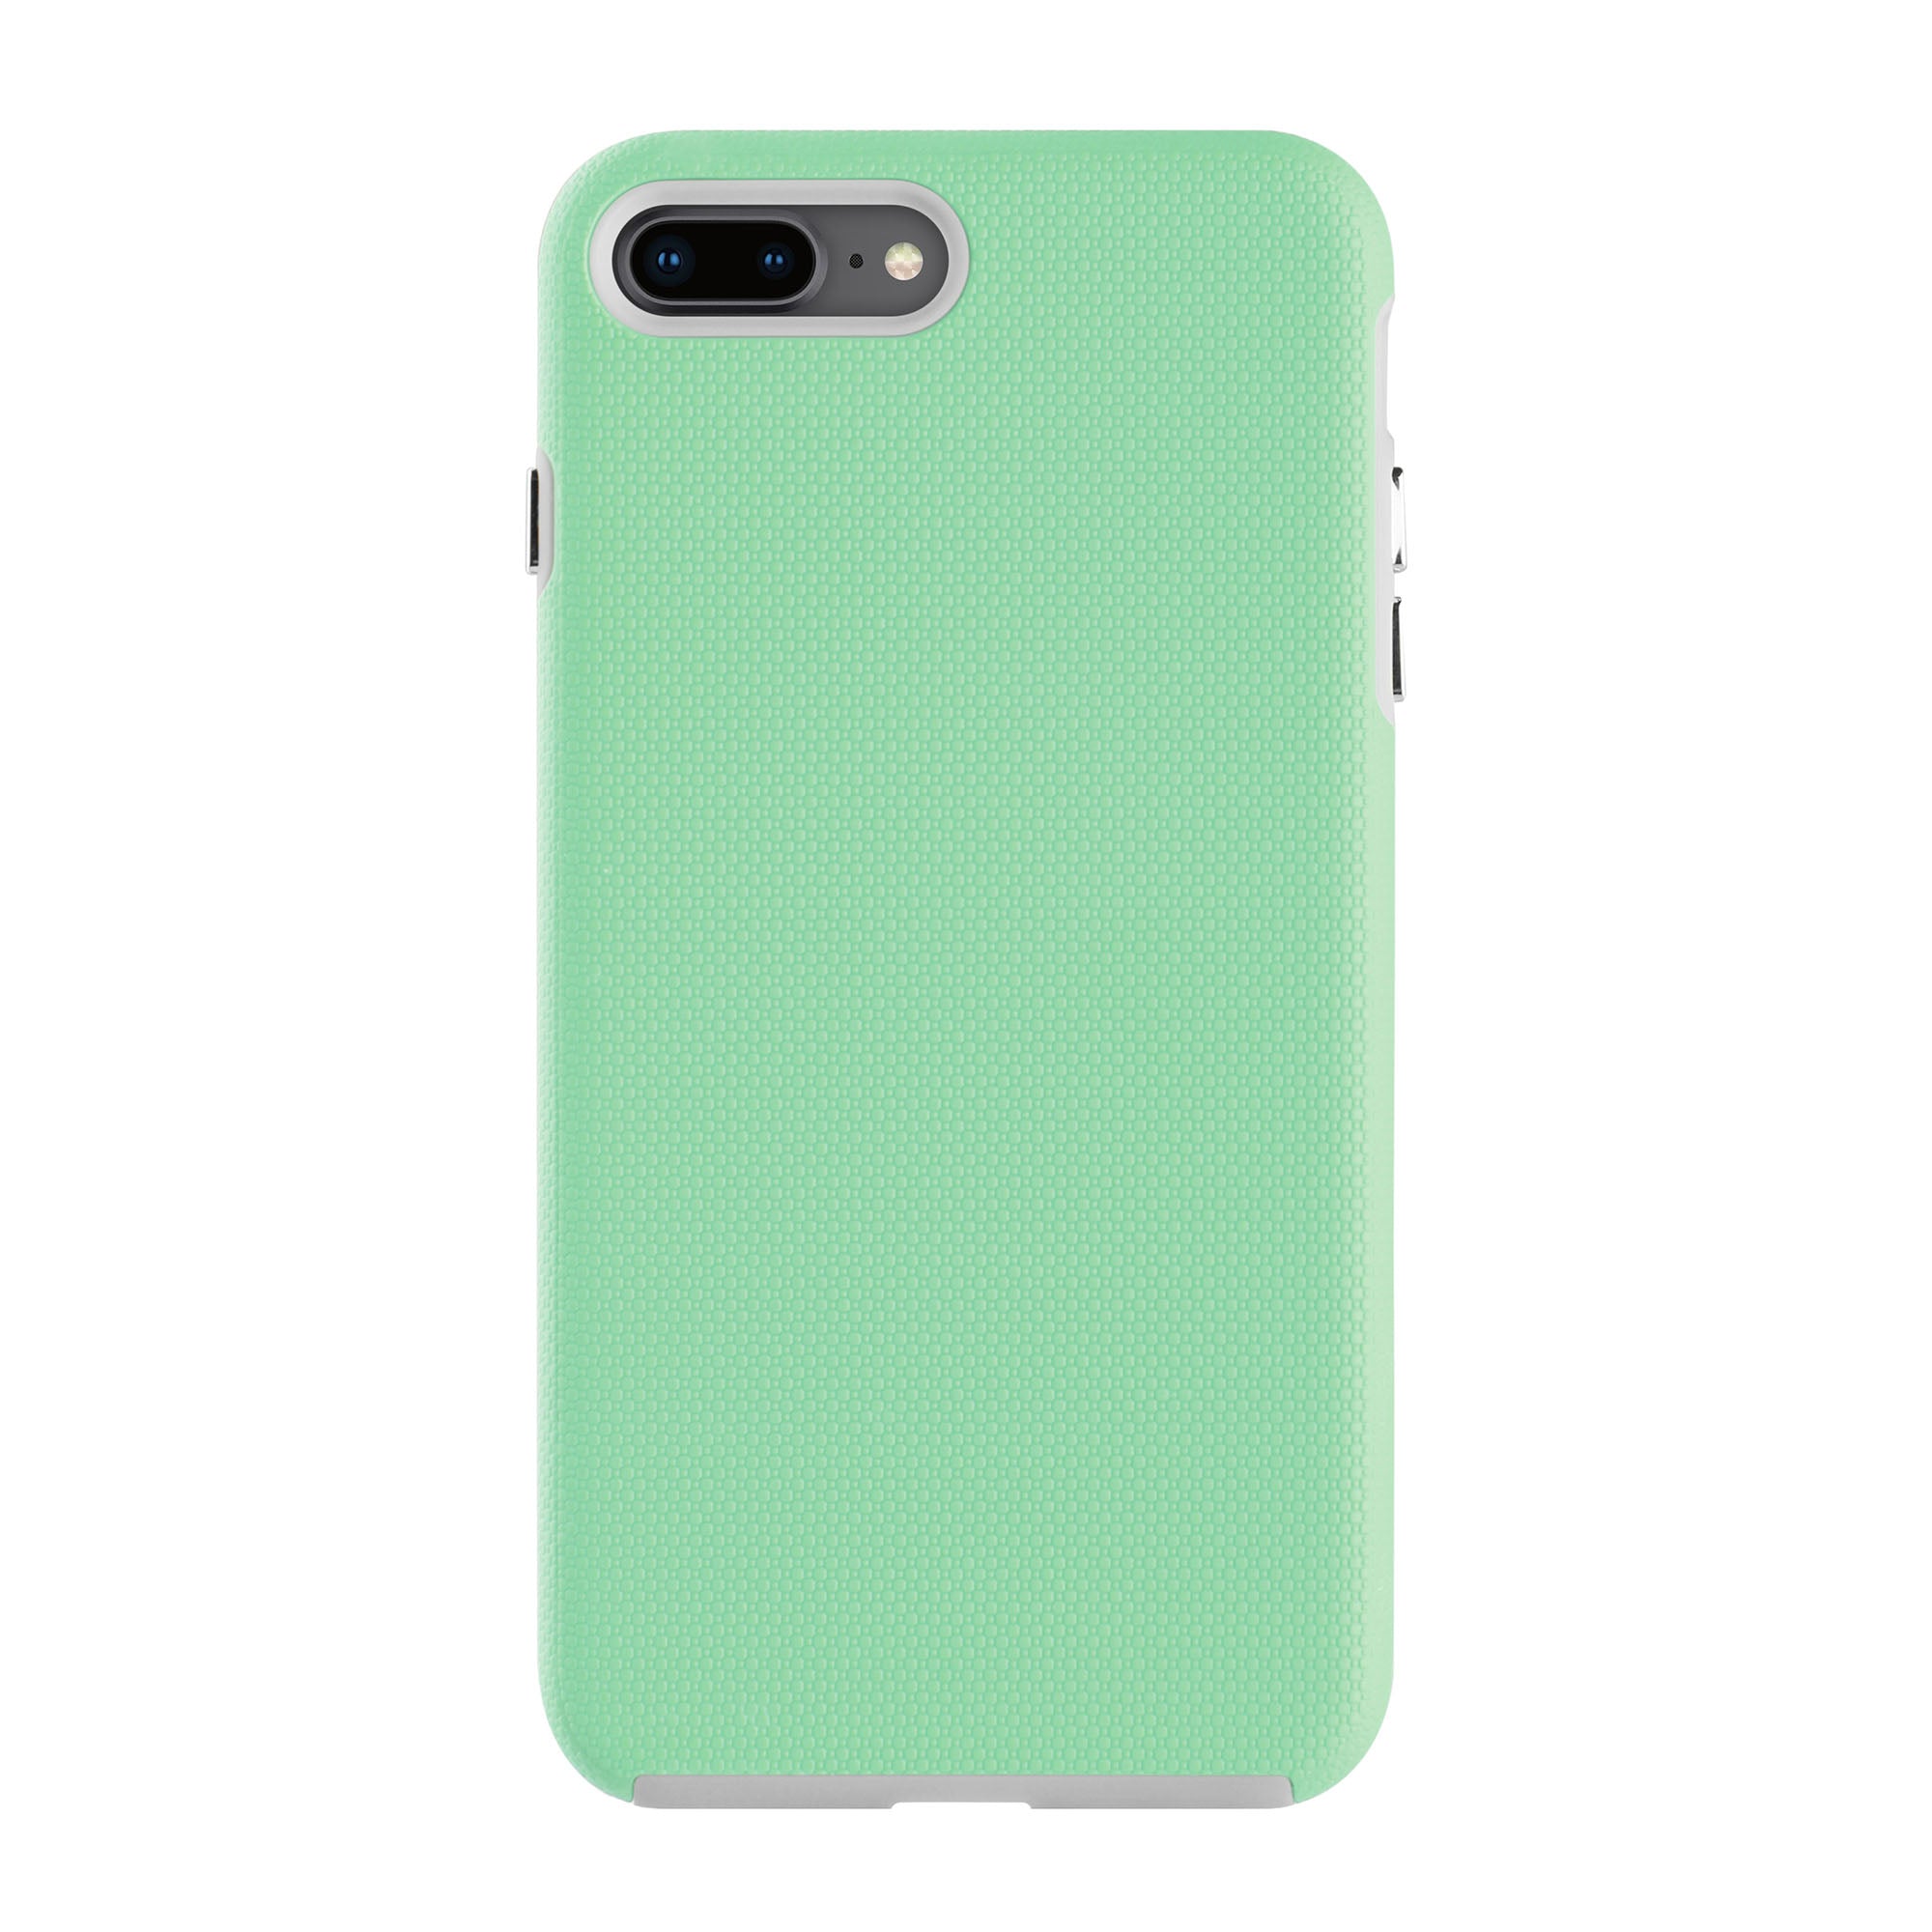 iPhone 8 Plus/7 Plus Xqisit Green Armet Protective case - 15-03109